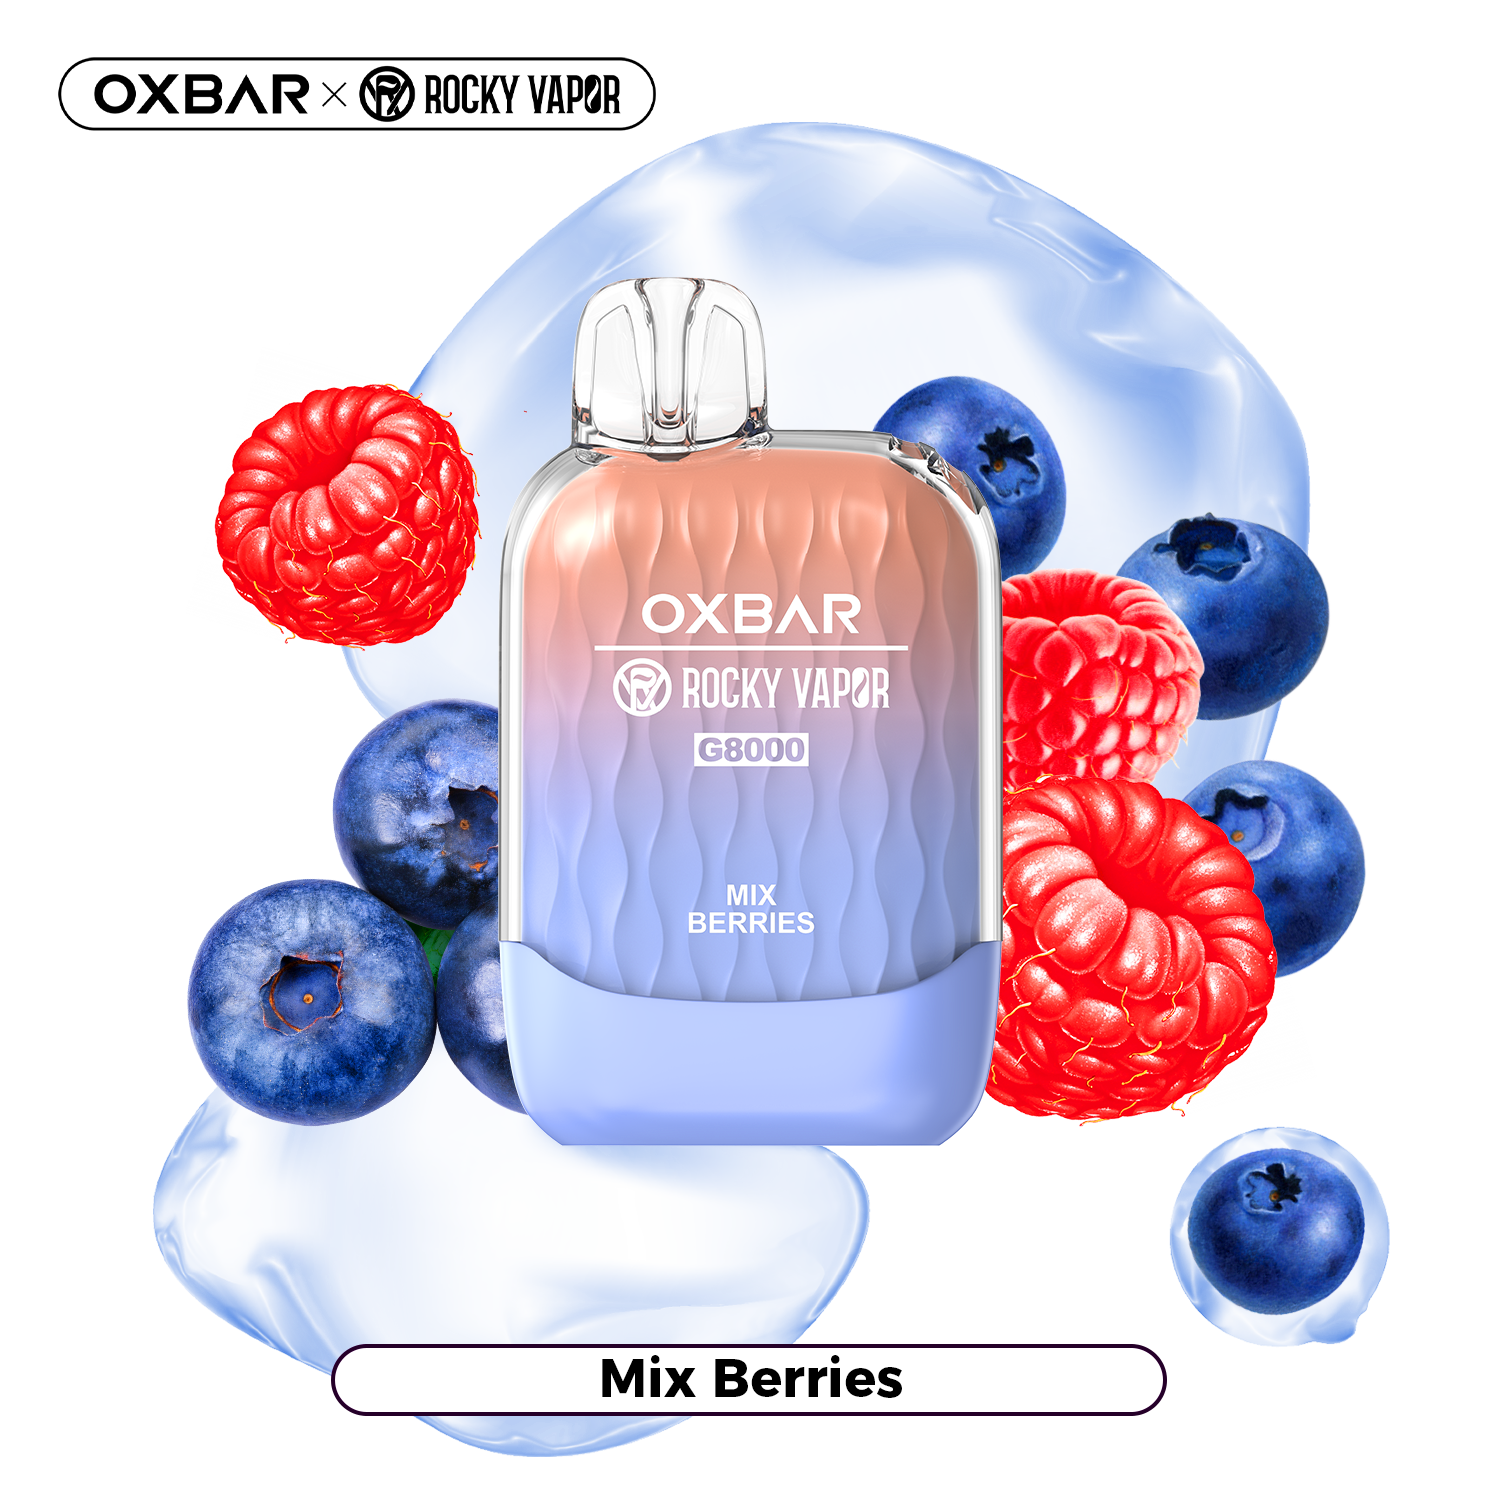 Mix Berries - OXBAR G8000 - 20mg - 5pc/box